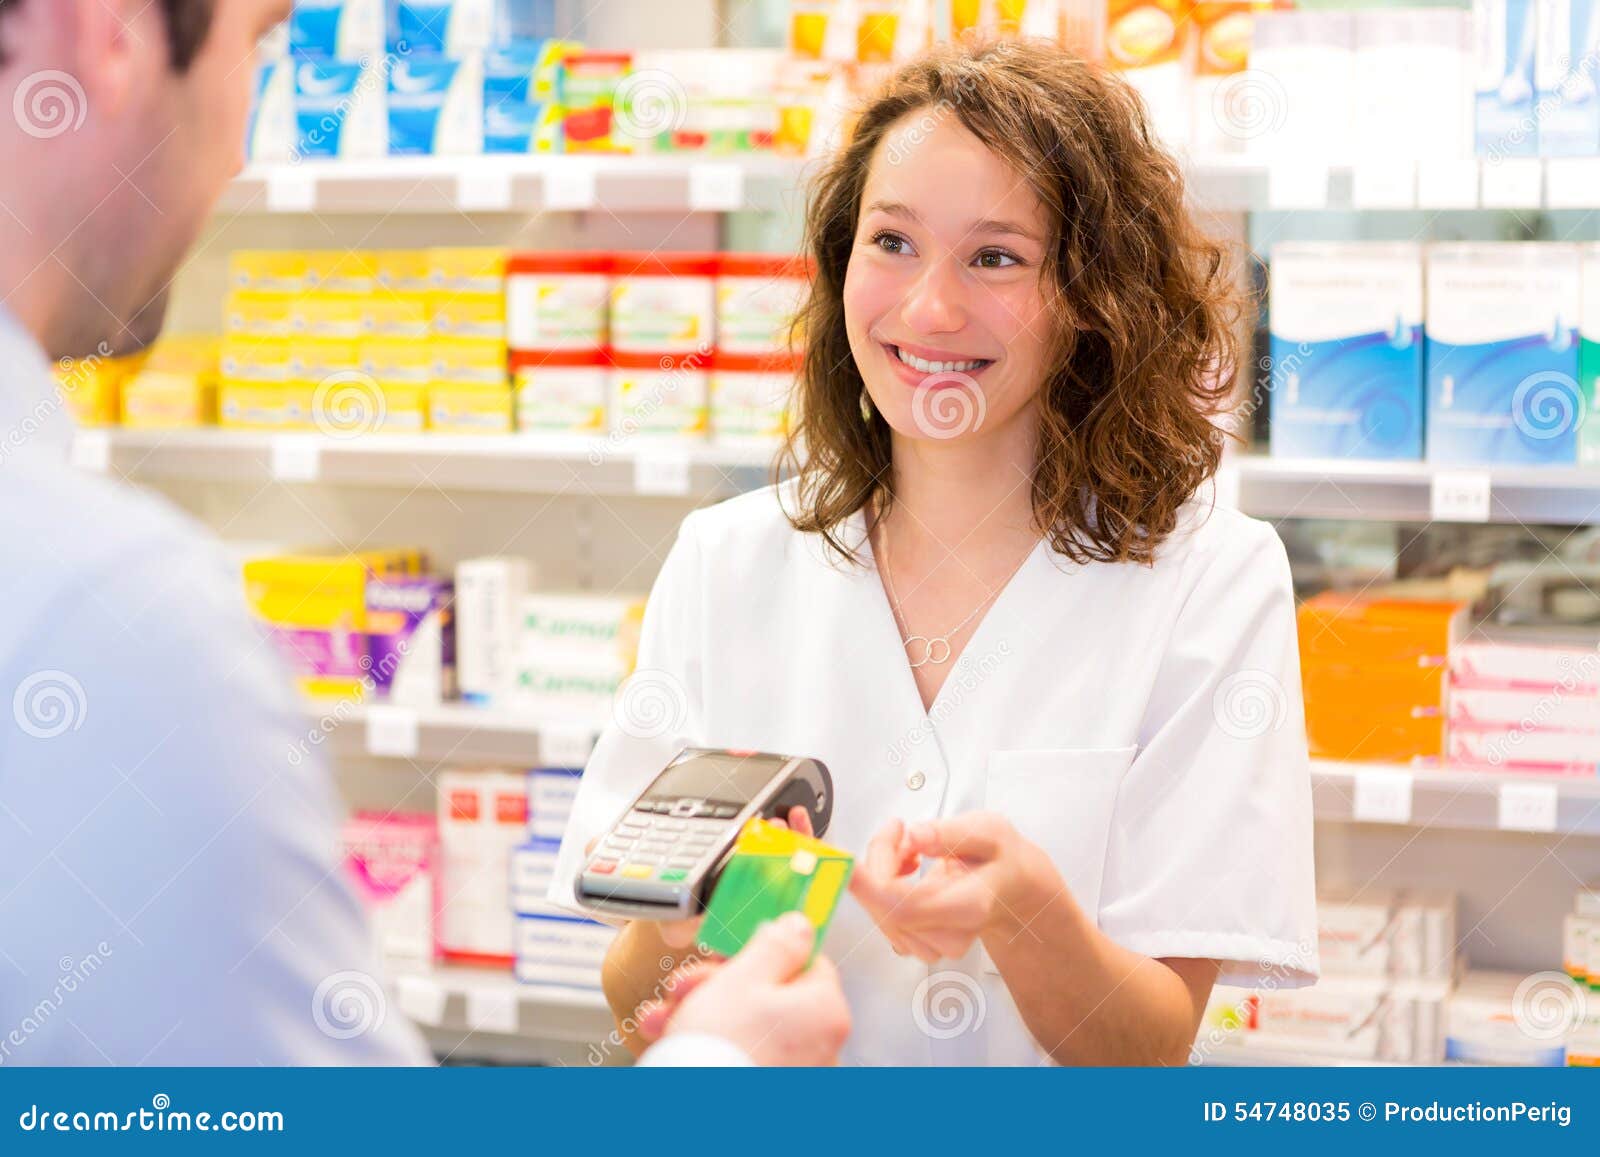 Attractive Pharmacist Taking Healt Insurance Card Stock Image - Image